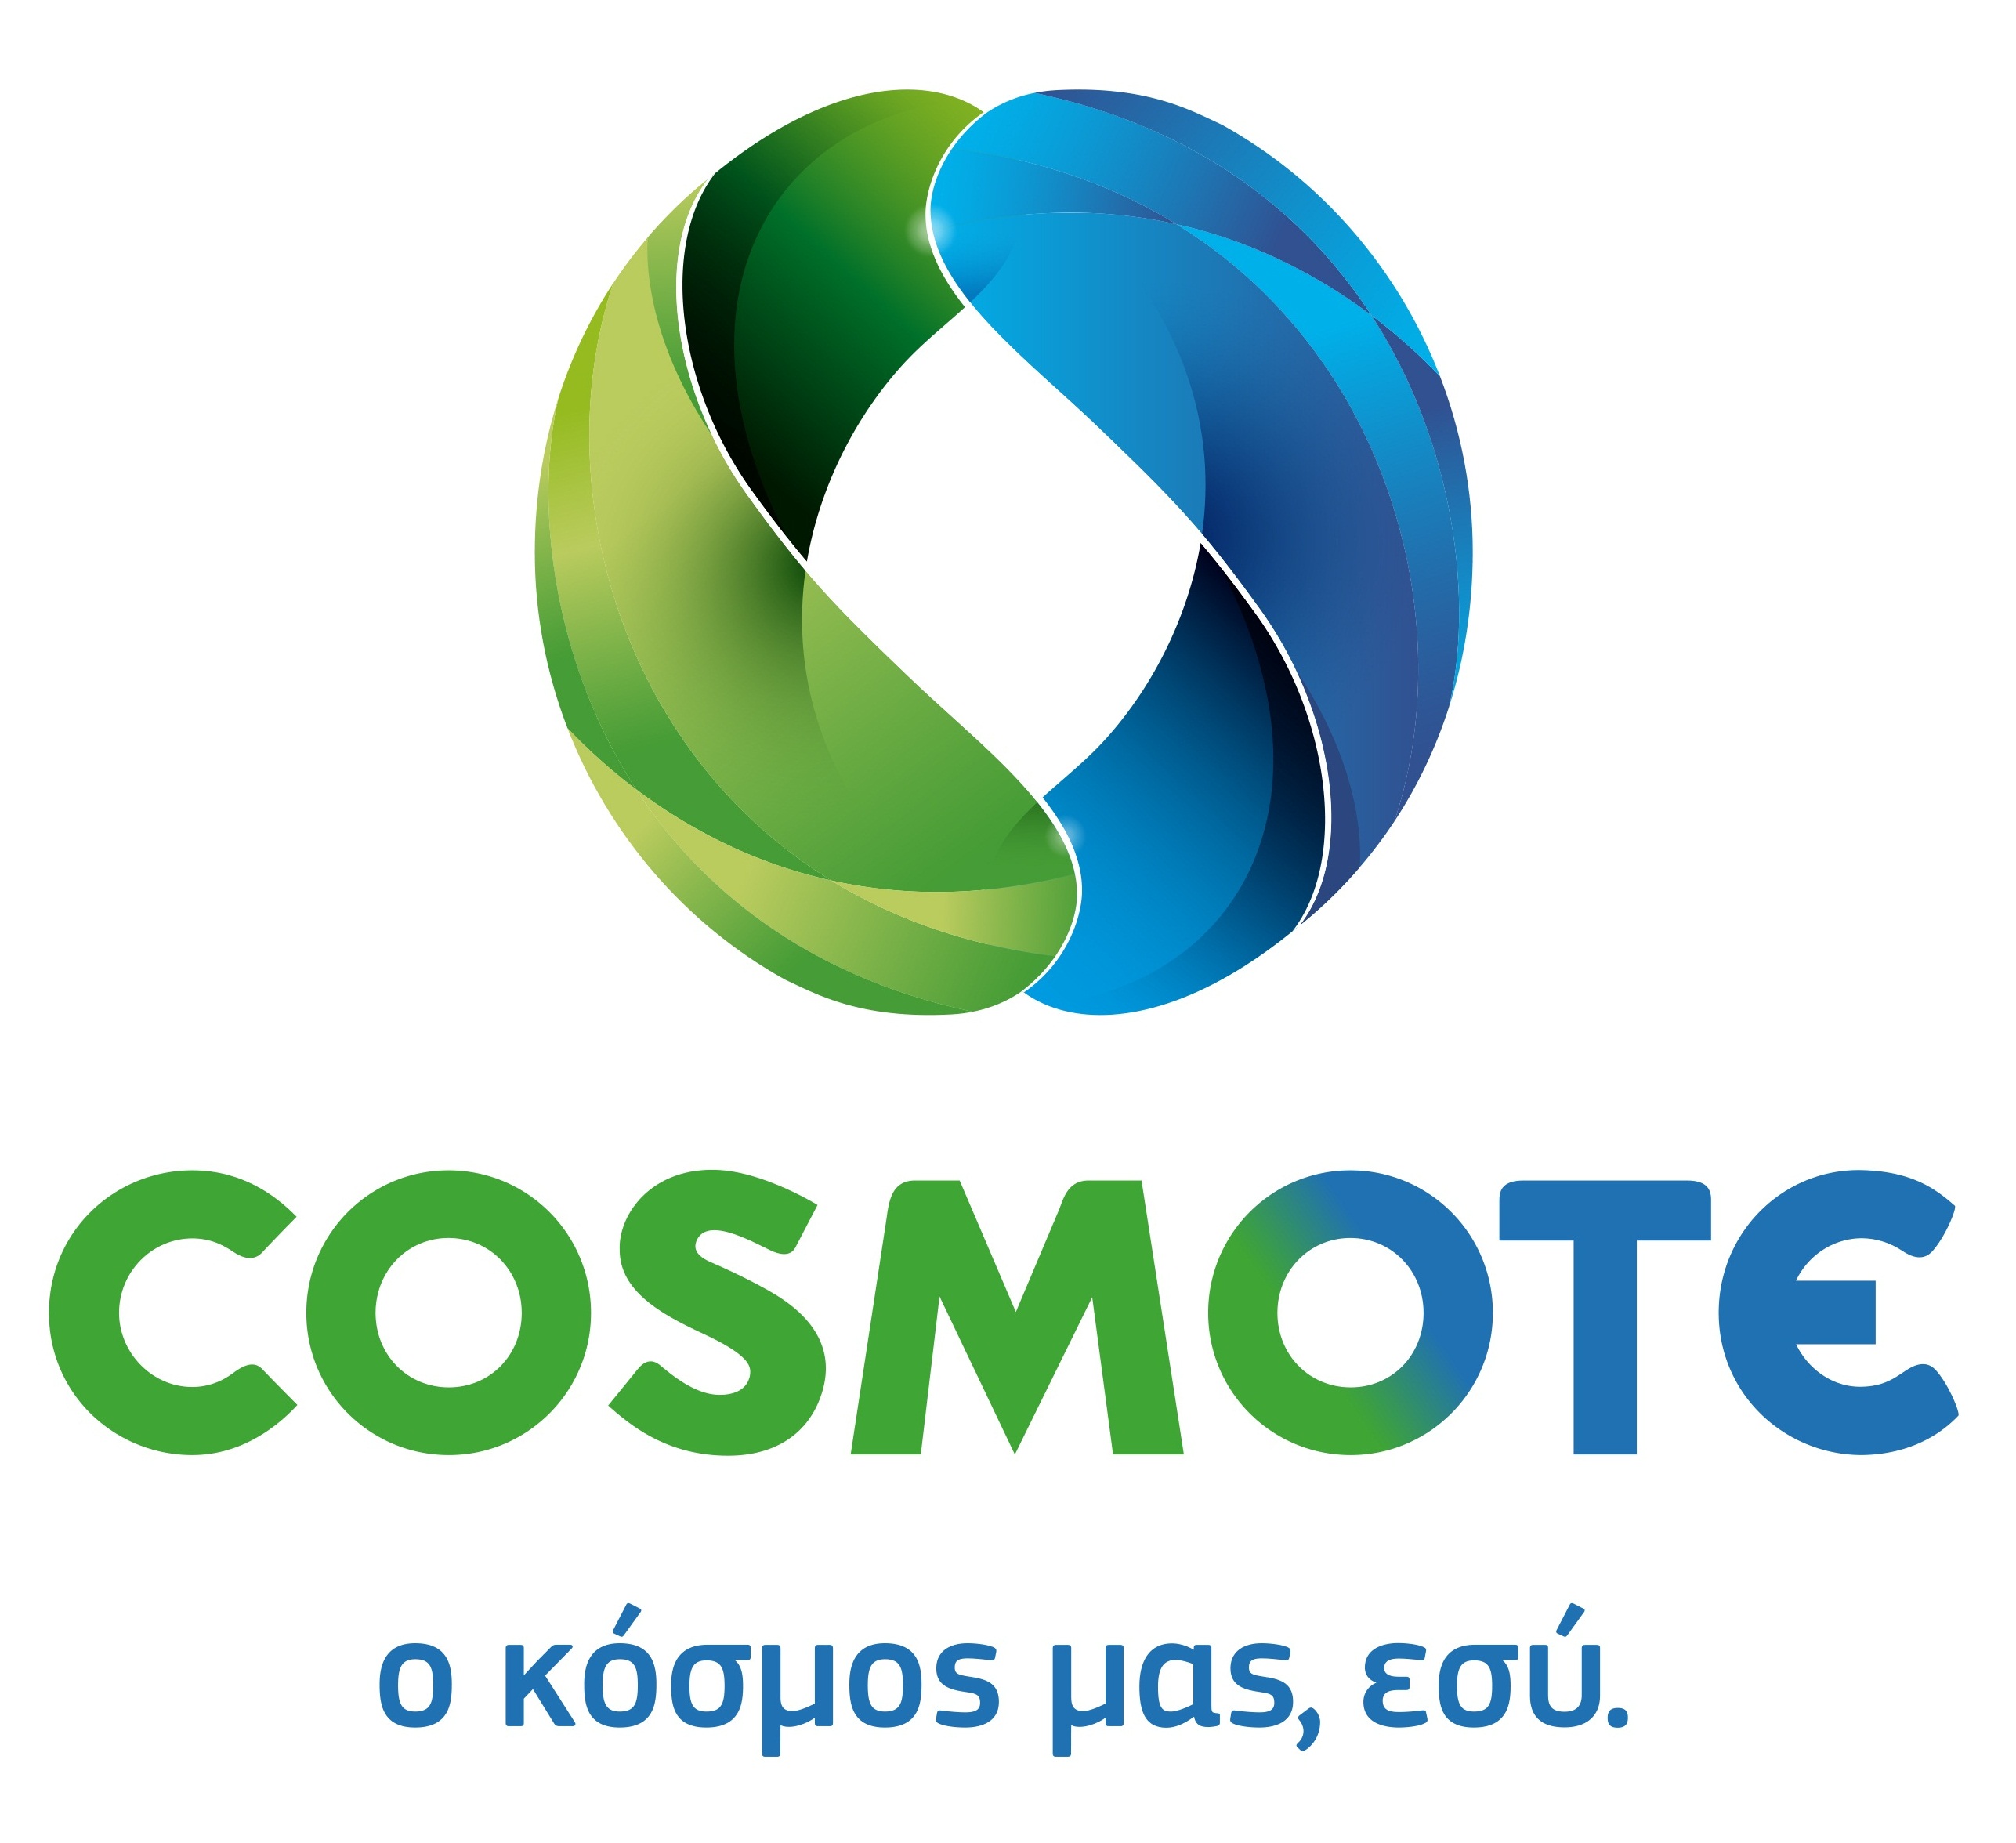 Cosmote logo | Techmaniacs